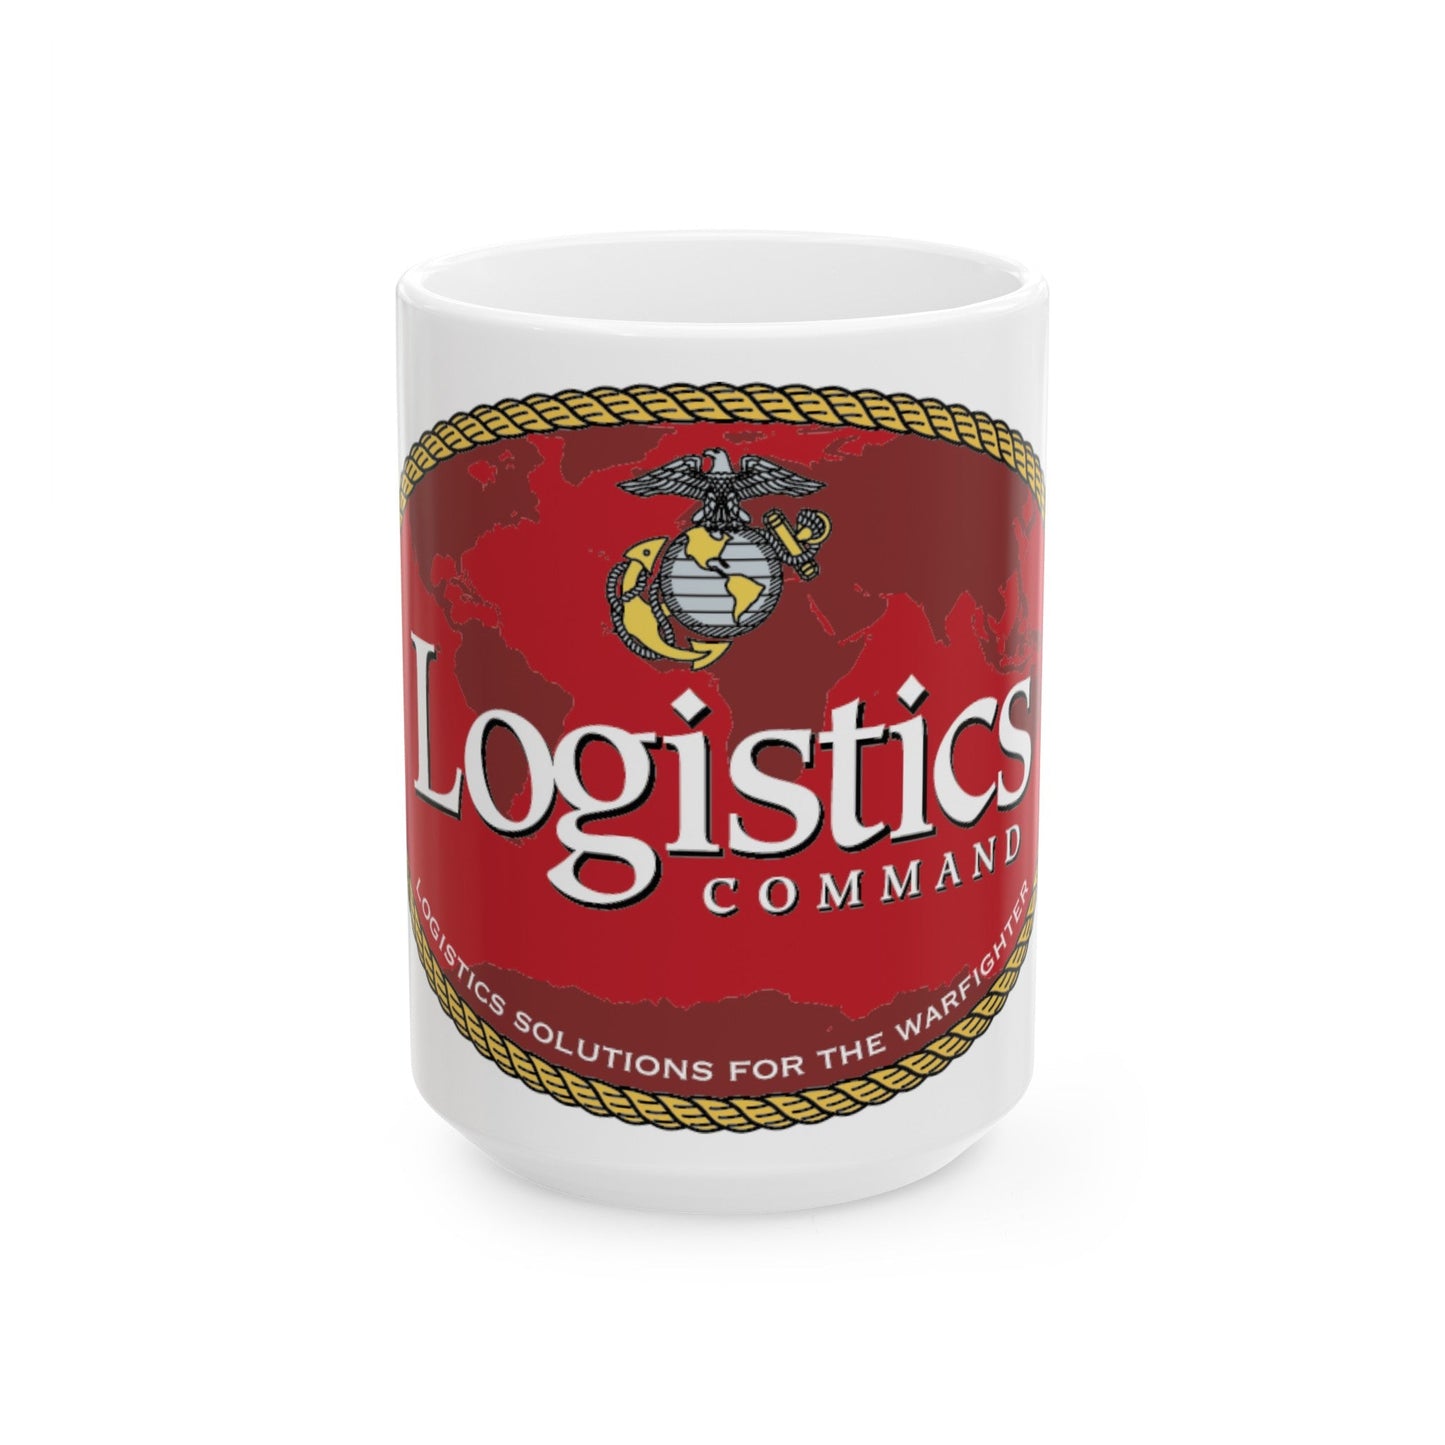 USMC Logistics Command (USMC) White Coffee Mug